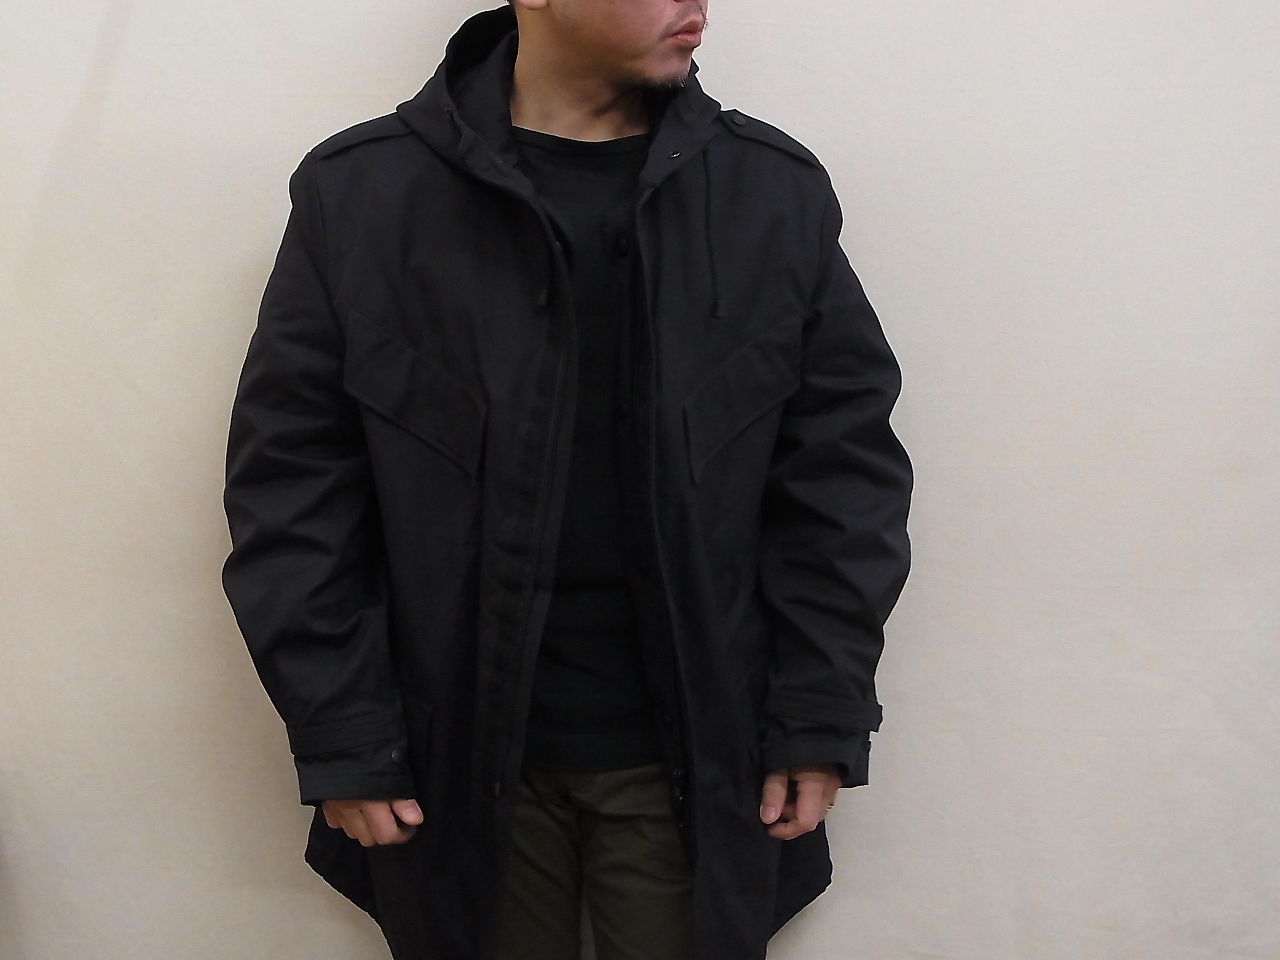 dutchmilitary-hooded-jacket-20190318-2